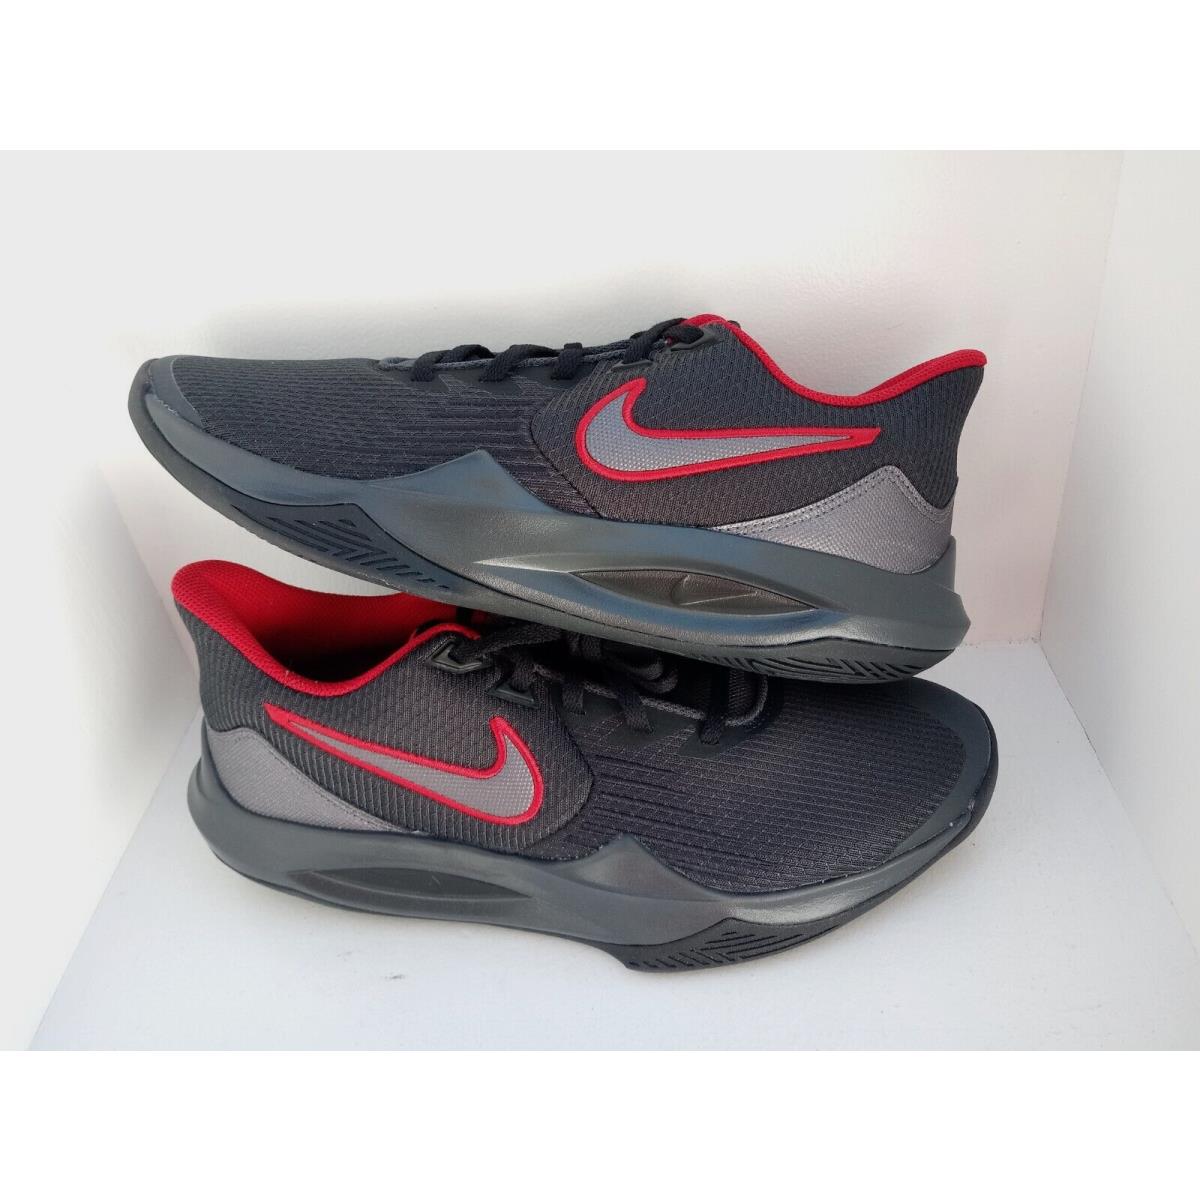 Nike shoes Precision - ANTHRACITE/MTLC DARK GREY 0